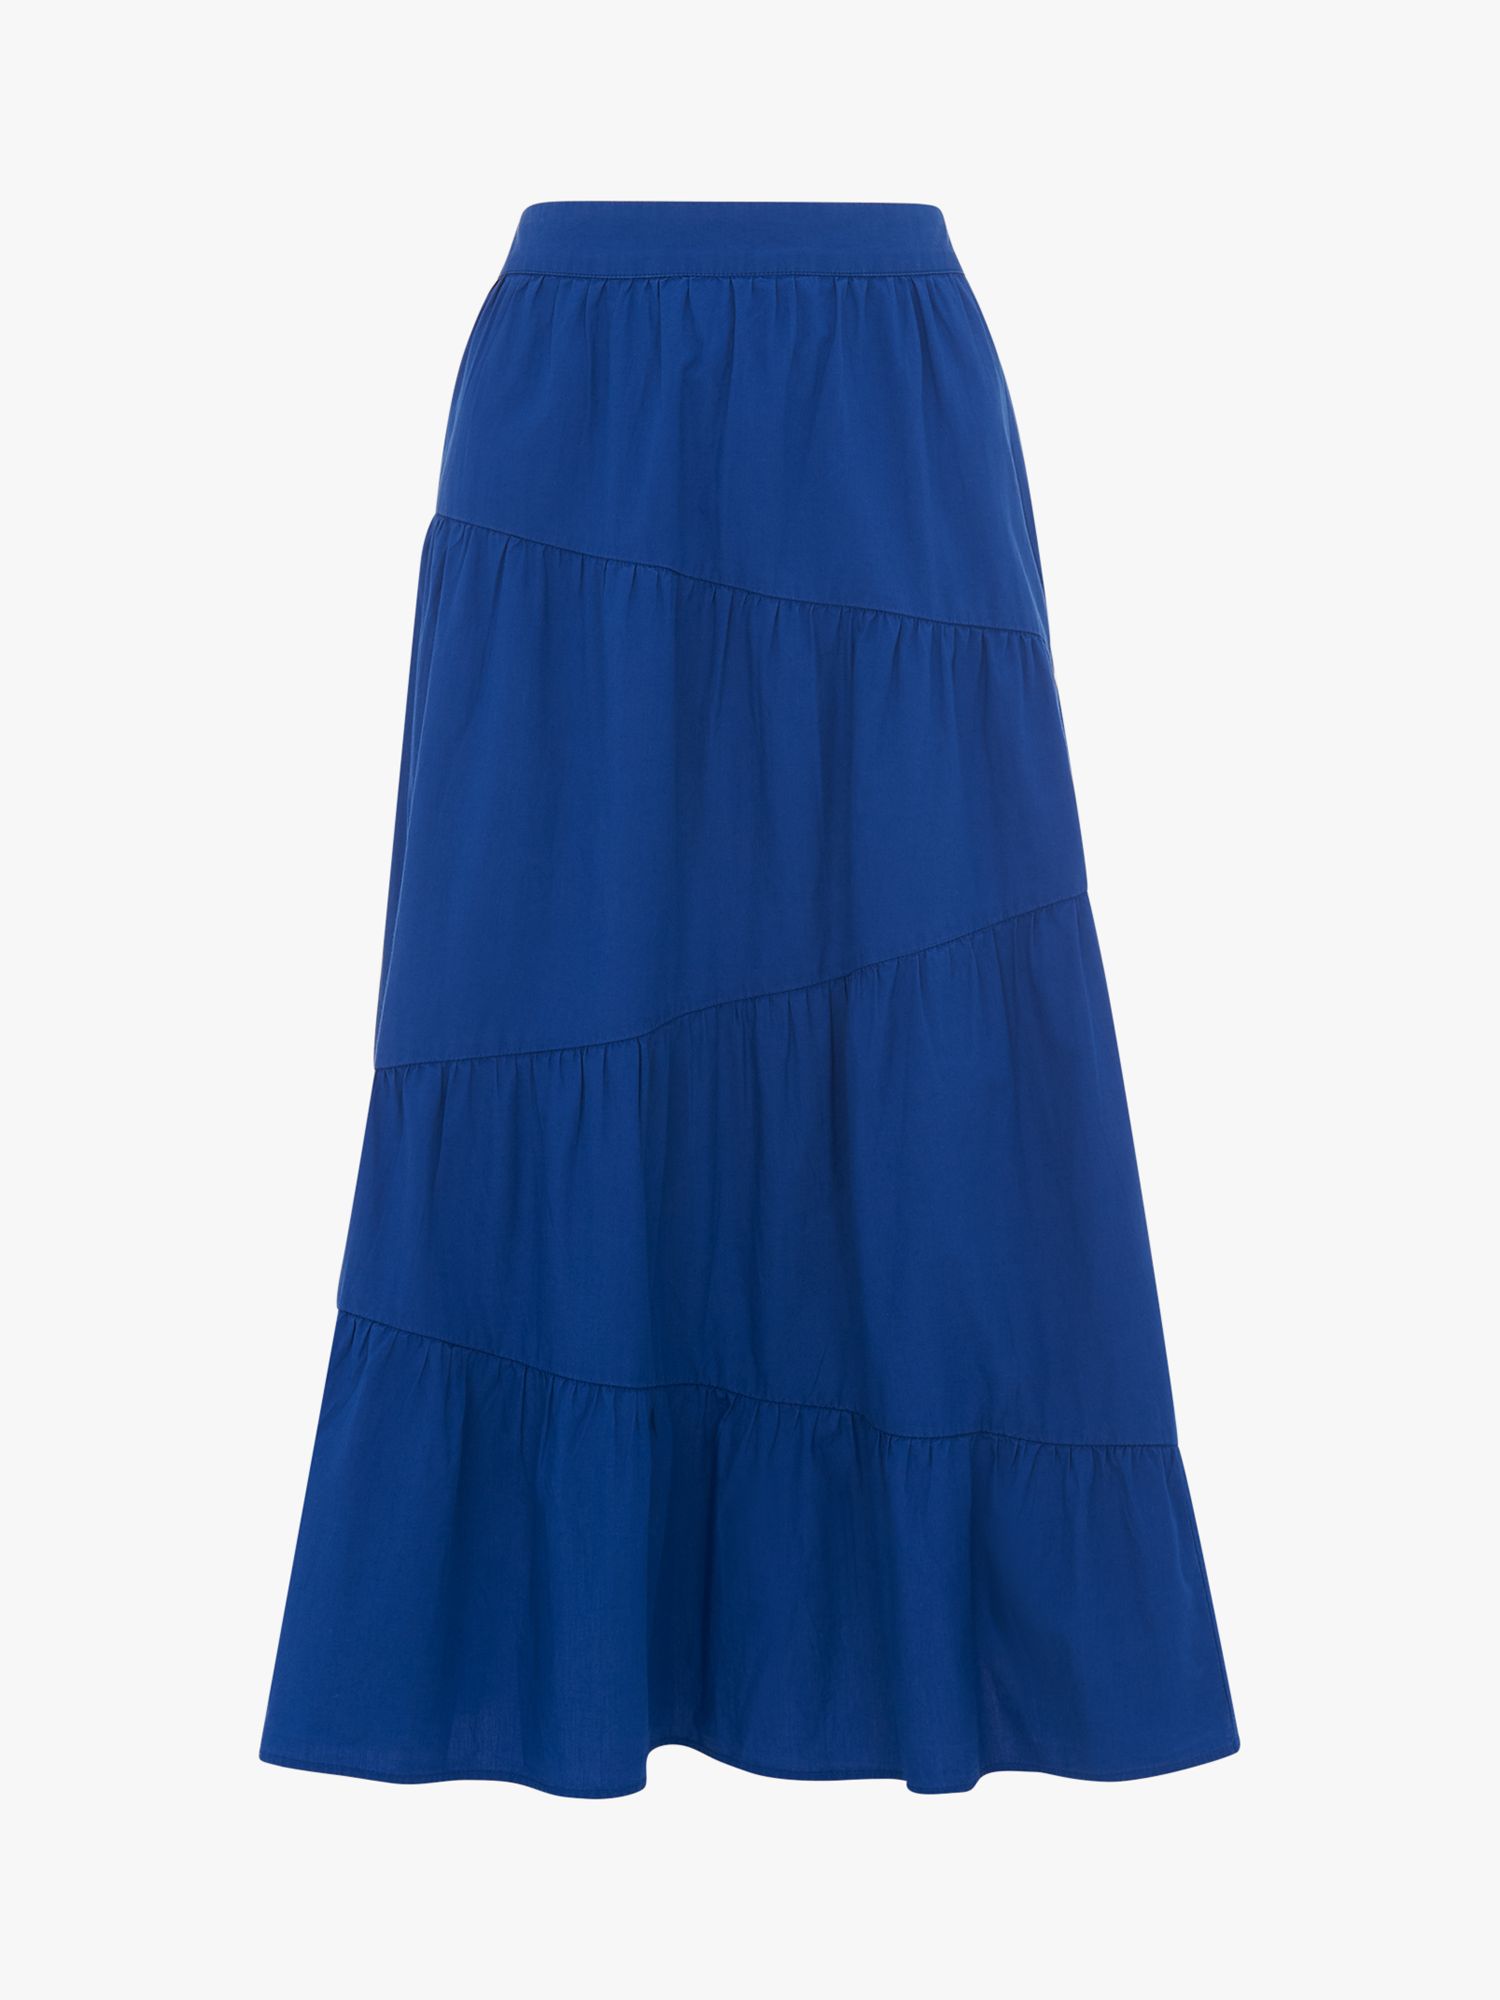 Whistles Maria Full Tiered Midi Skirt, Blue at John Lewis & Partners